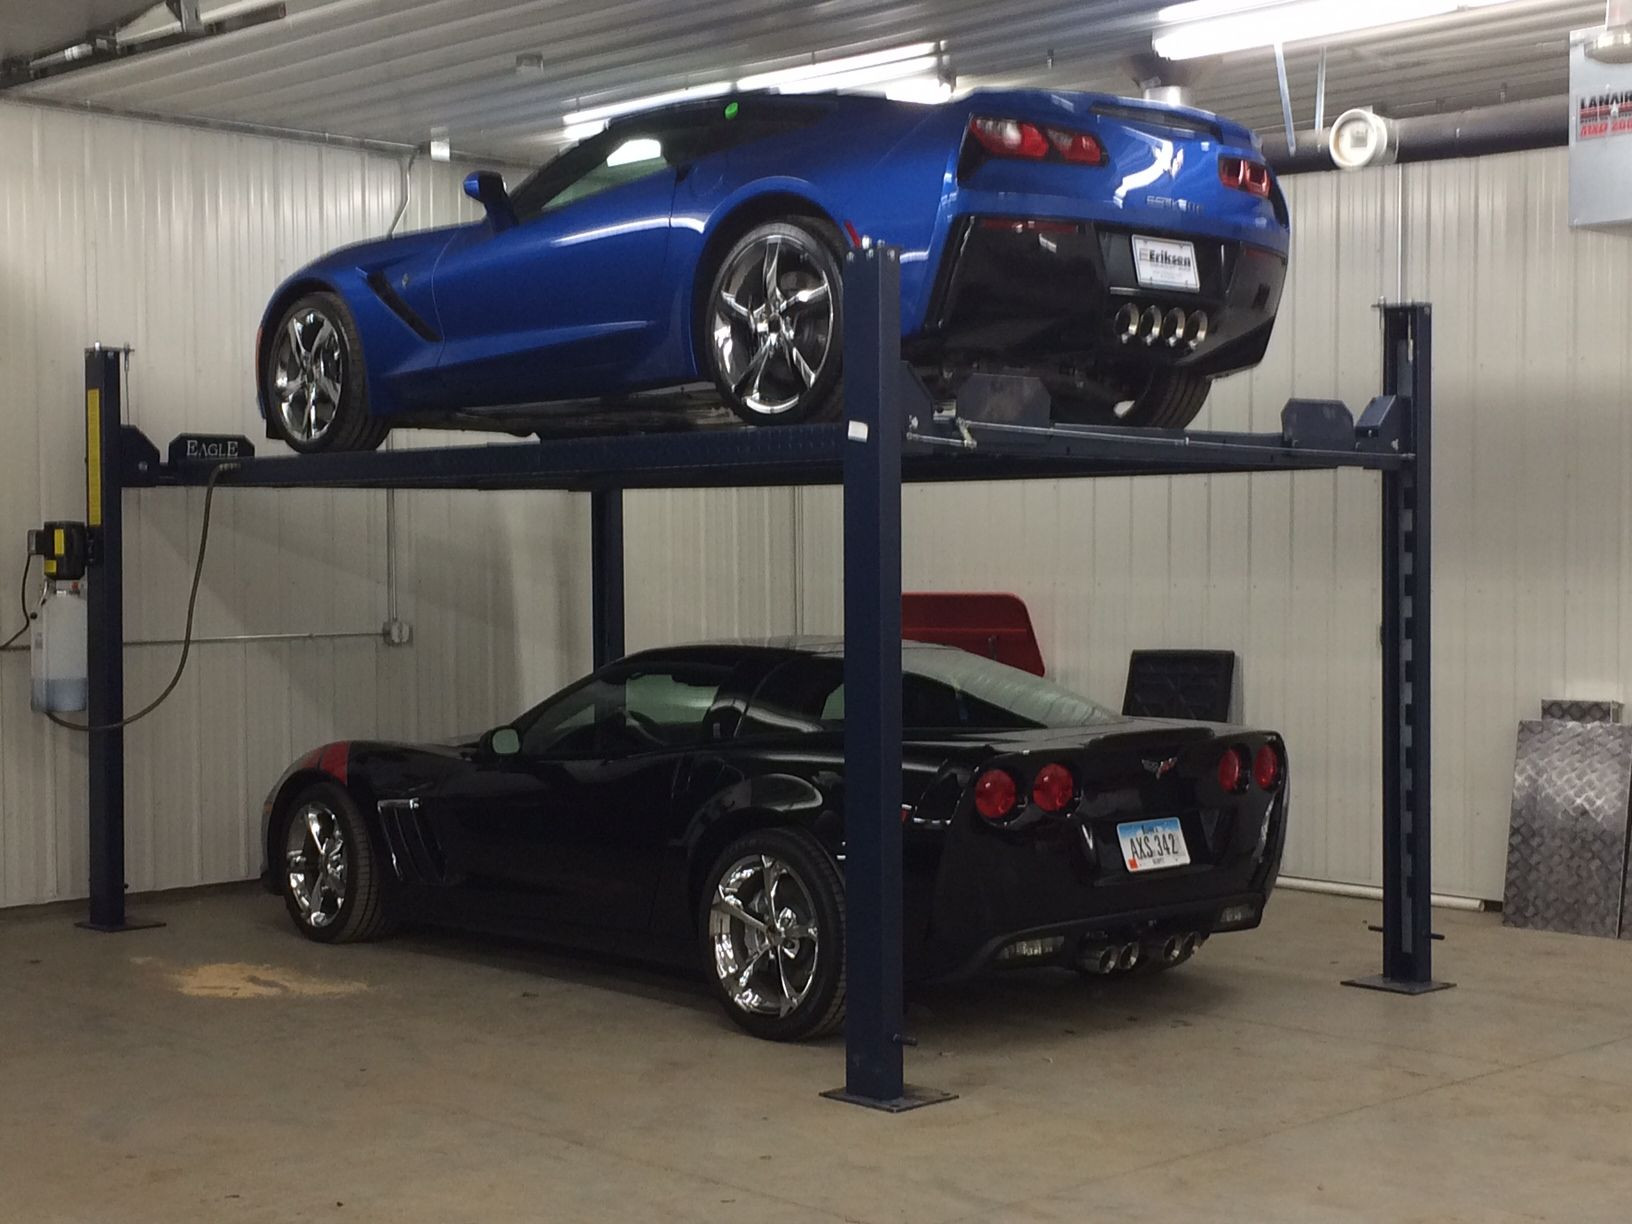 Best ideas about Garage Car Lift Storage
. Save or Pin We find better custom garage parking & storage solutions Now.